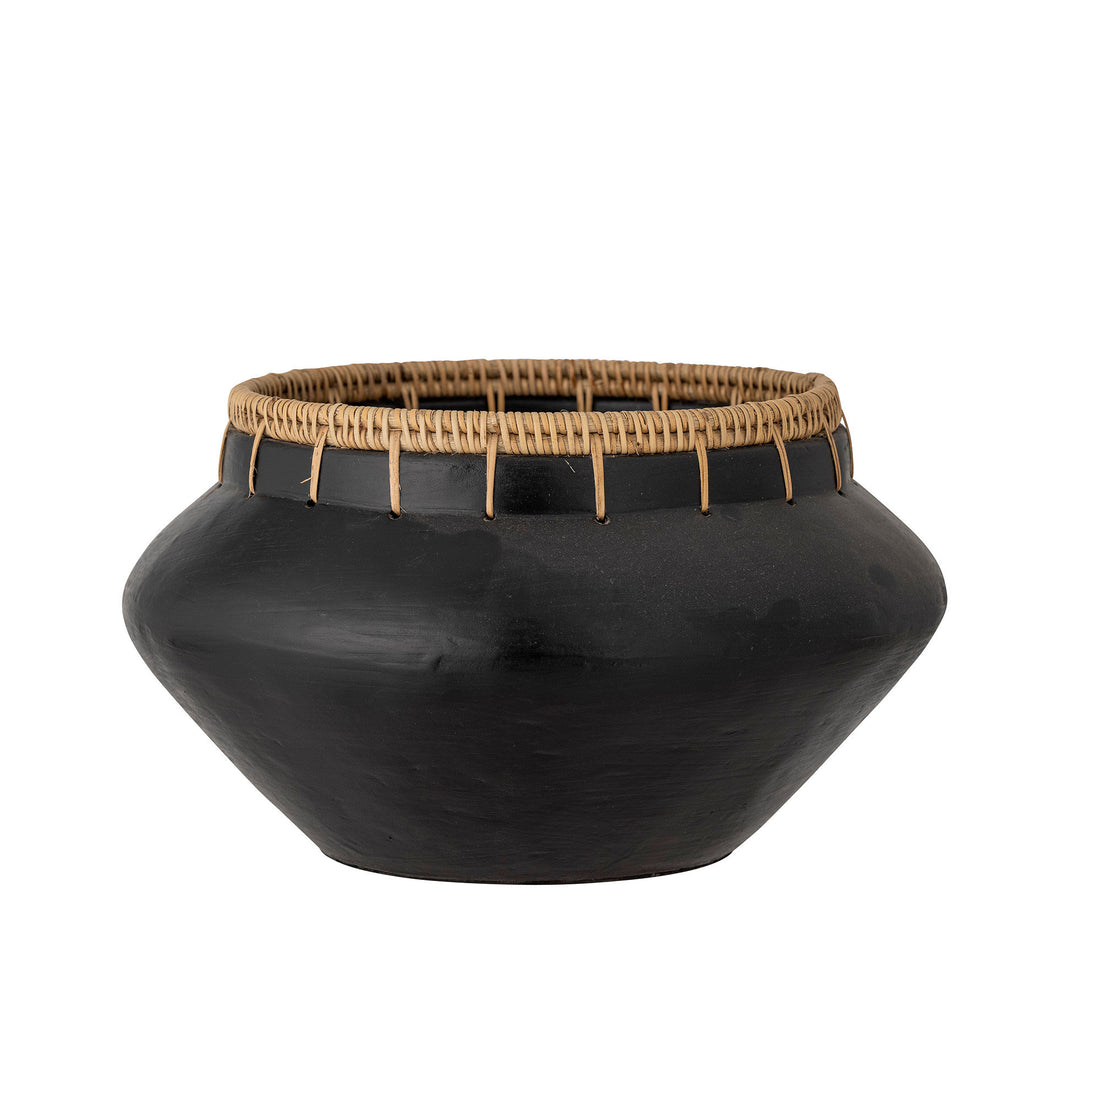 Bloomingville Dixon Decorative Bowl, Black, Terracotta